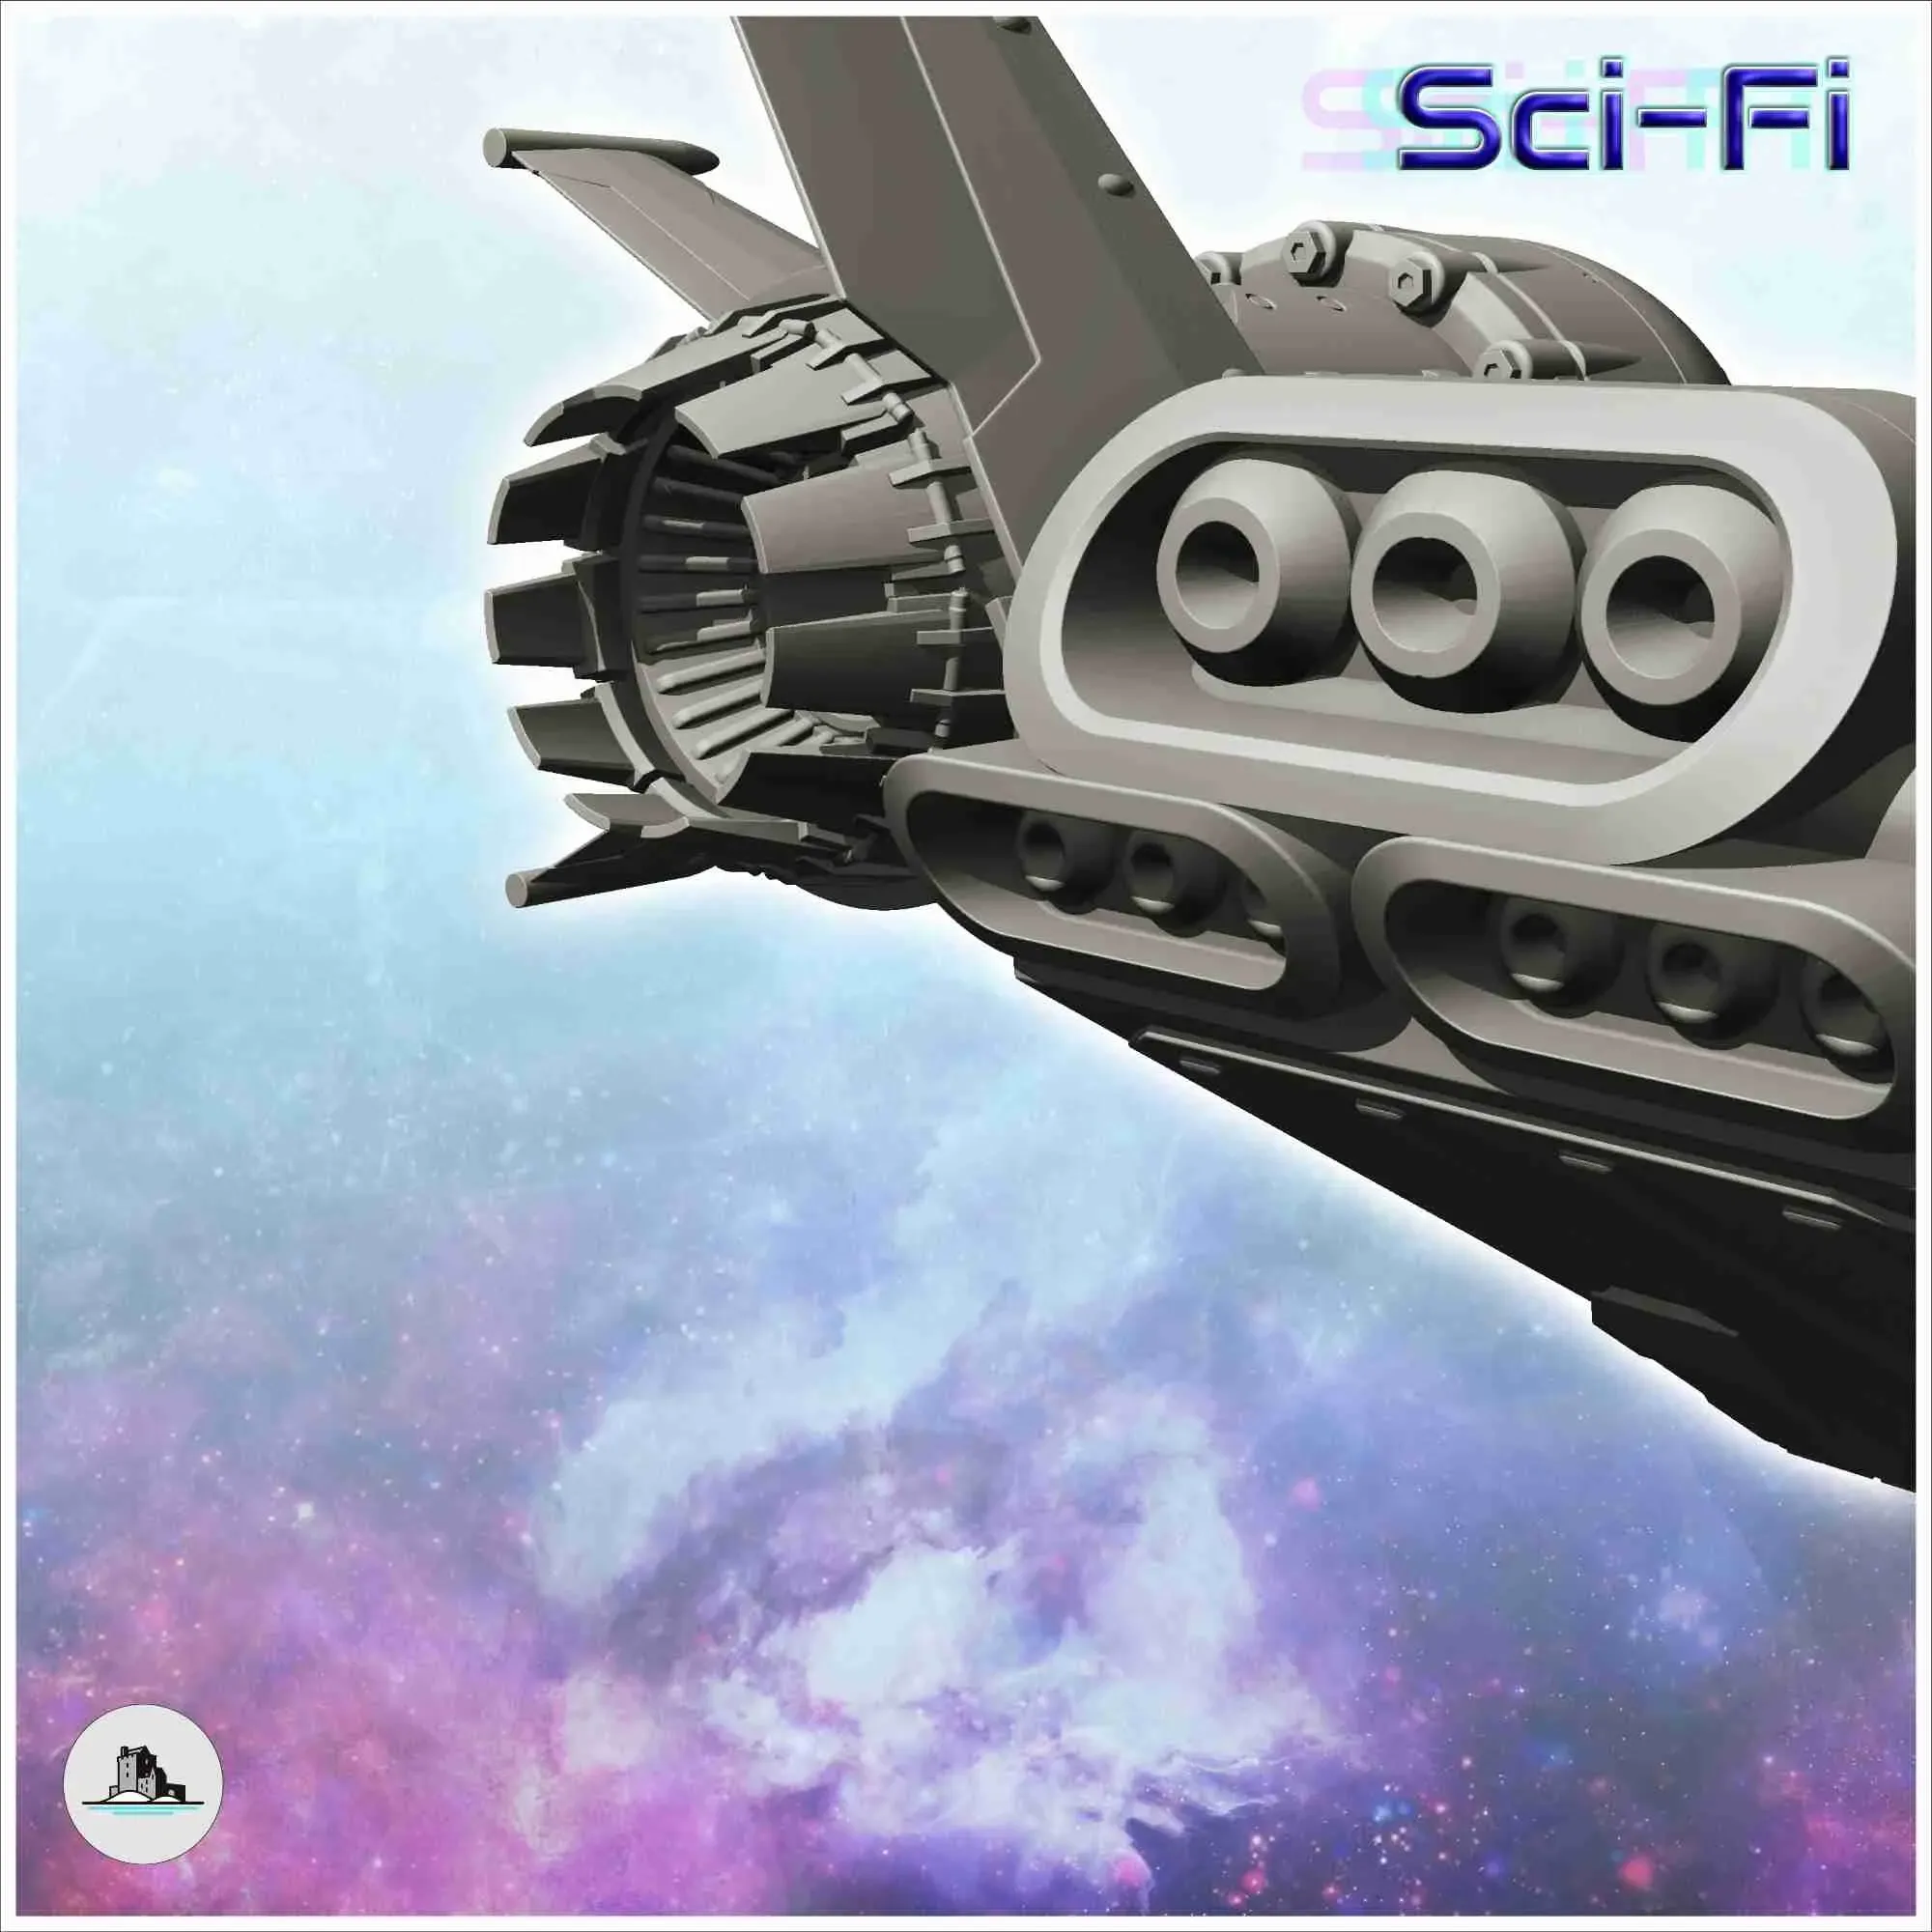 Mercurialis spaceship (40) - sci-fi science fiction future 4